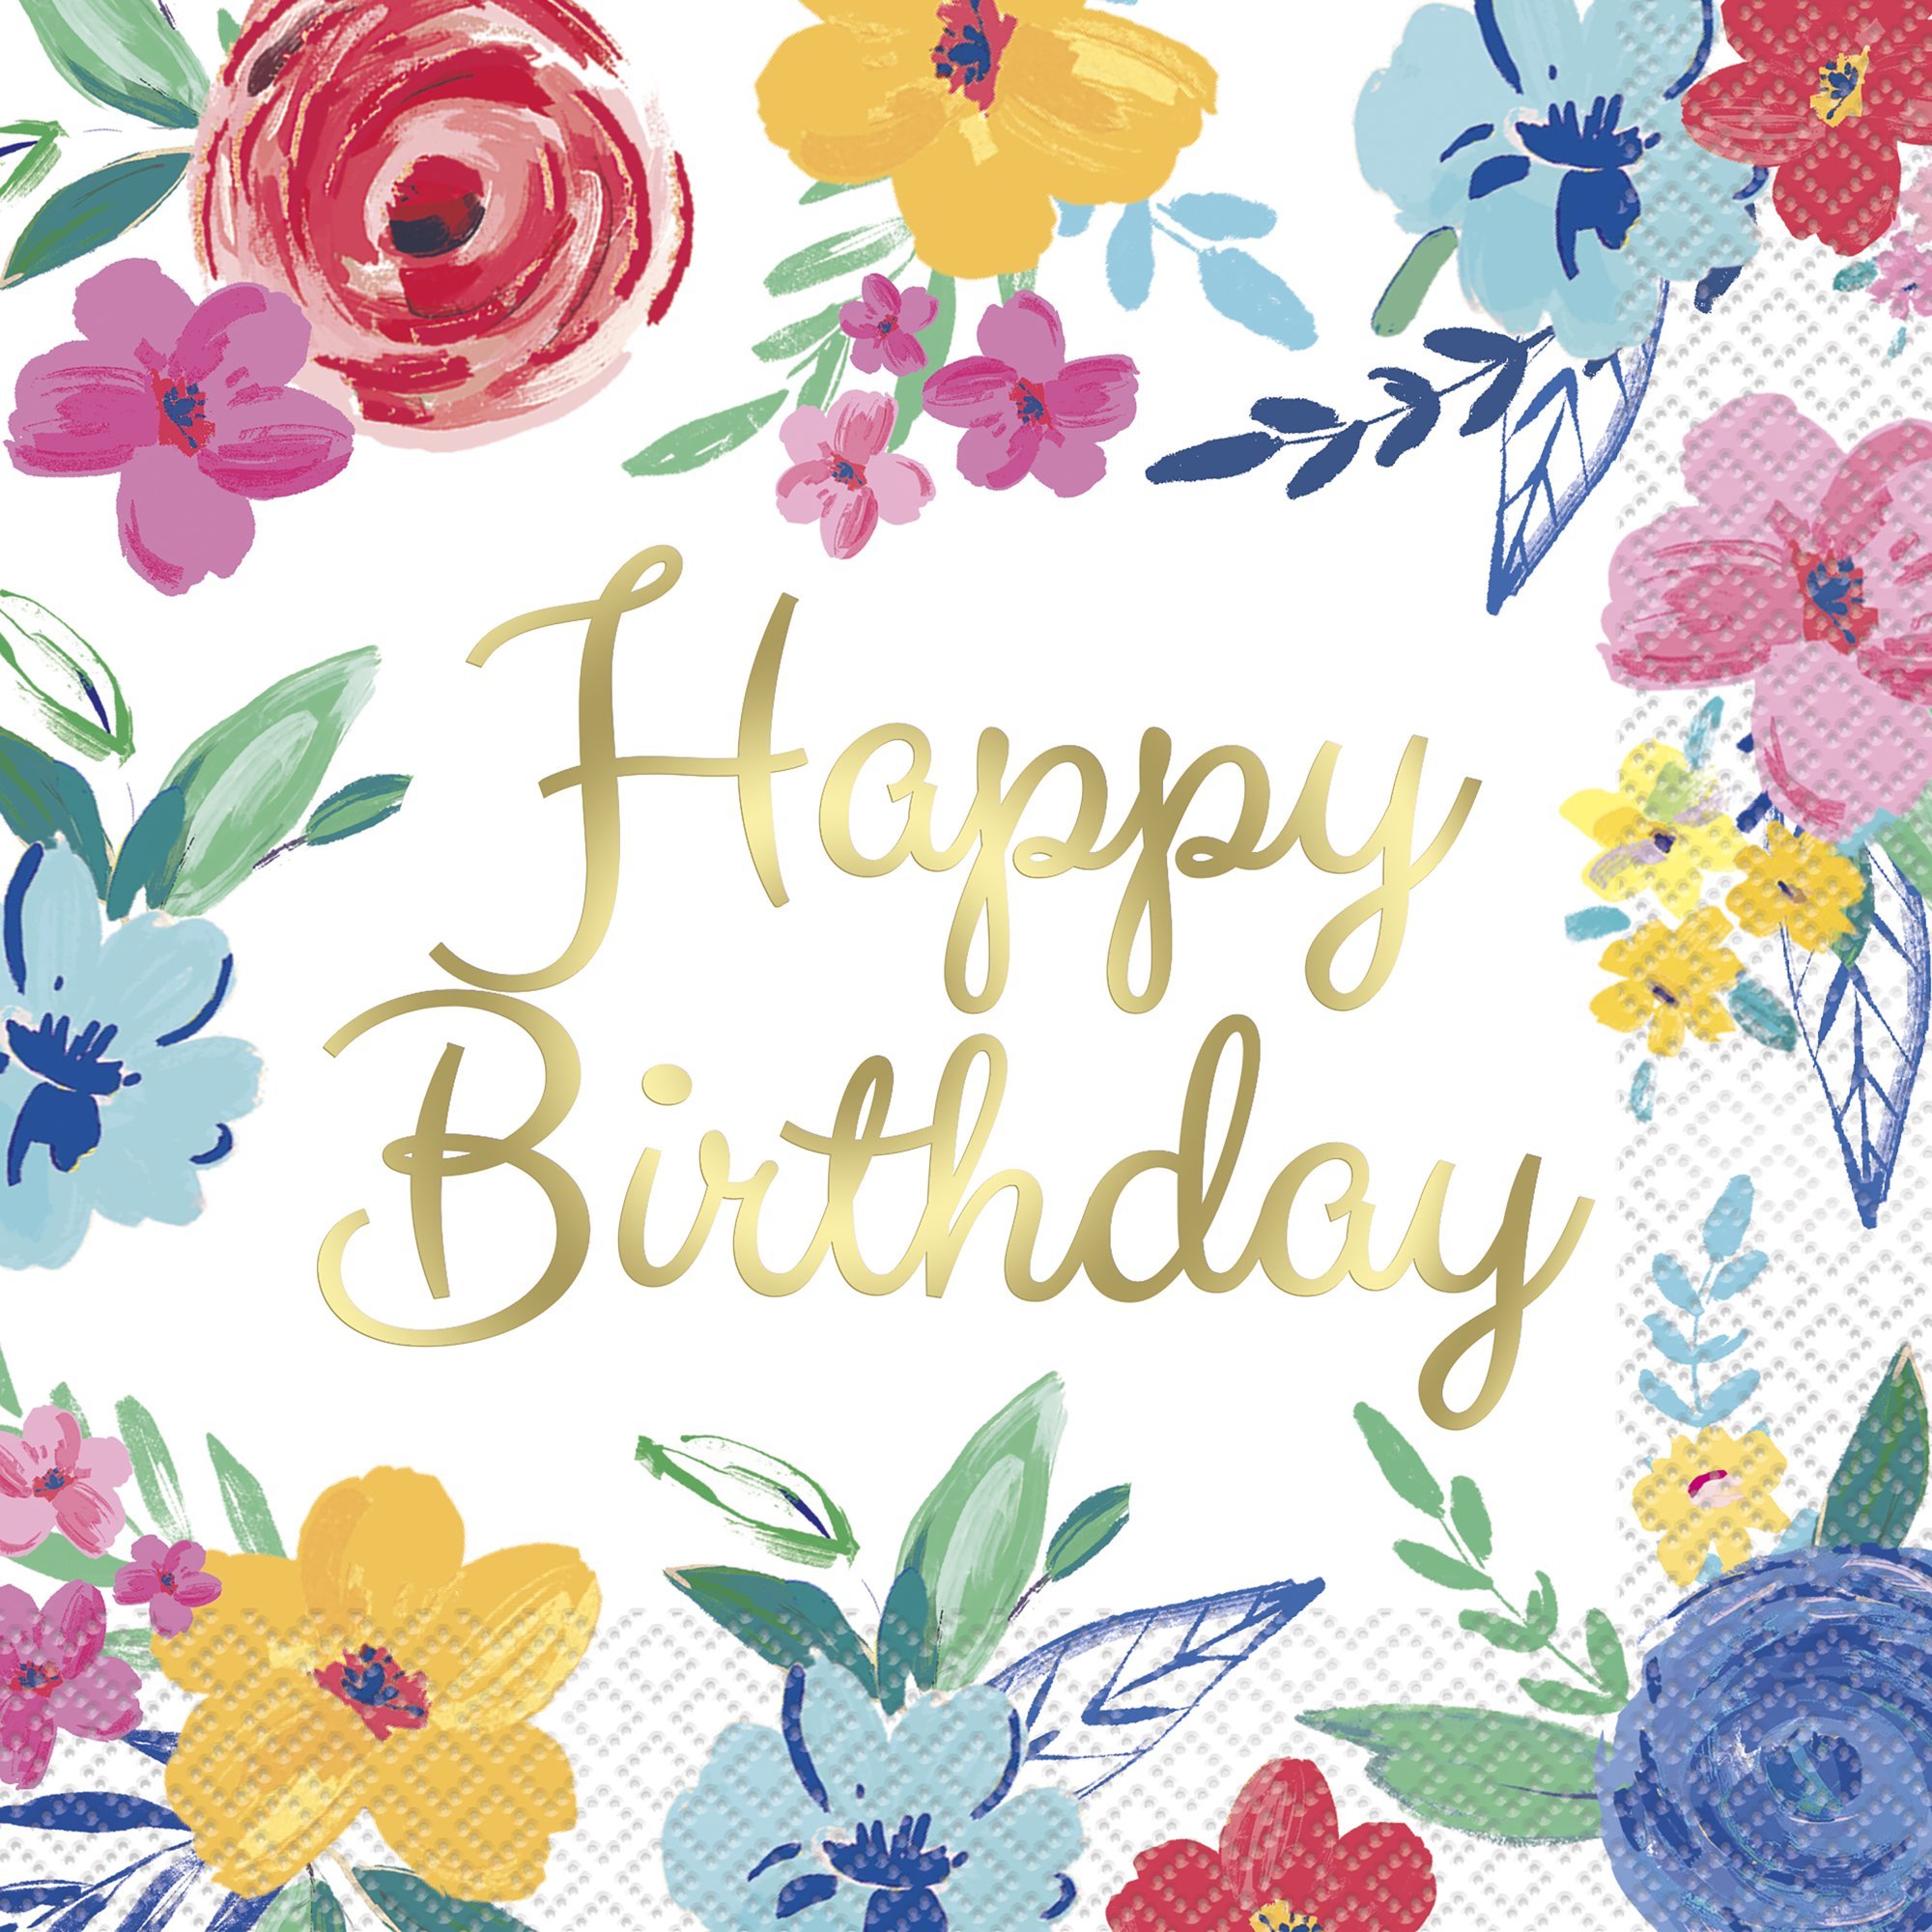  Happy Birthday to Meredith Baxter! 